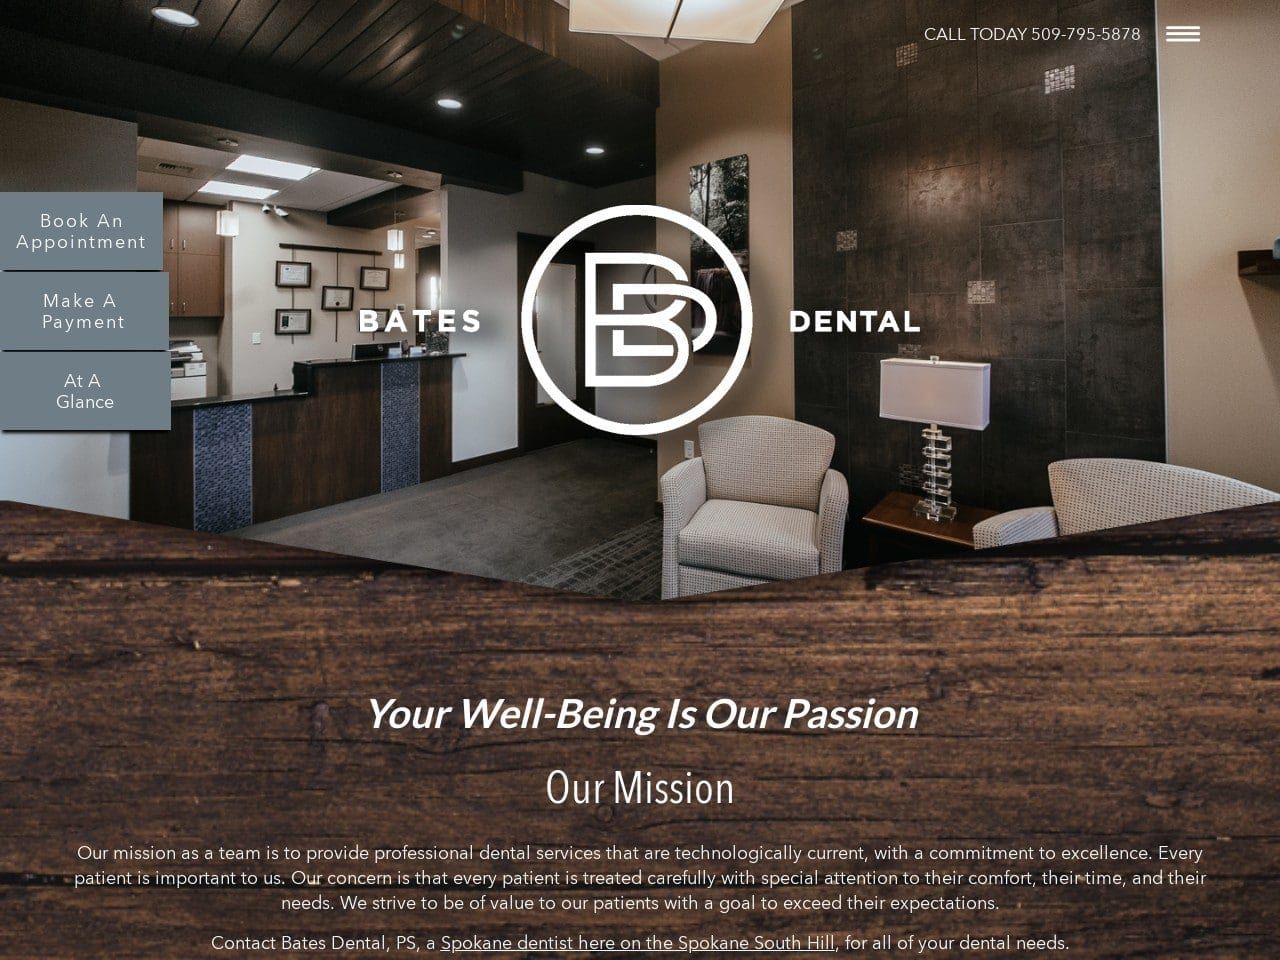 Bates Dental Website Screenshot From Url Batesdental.com